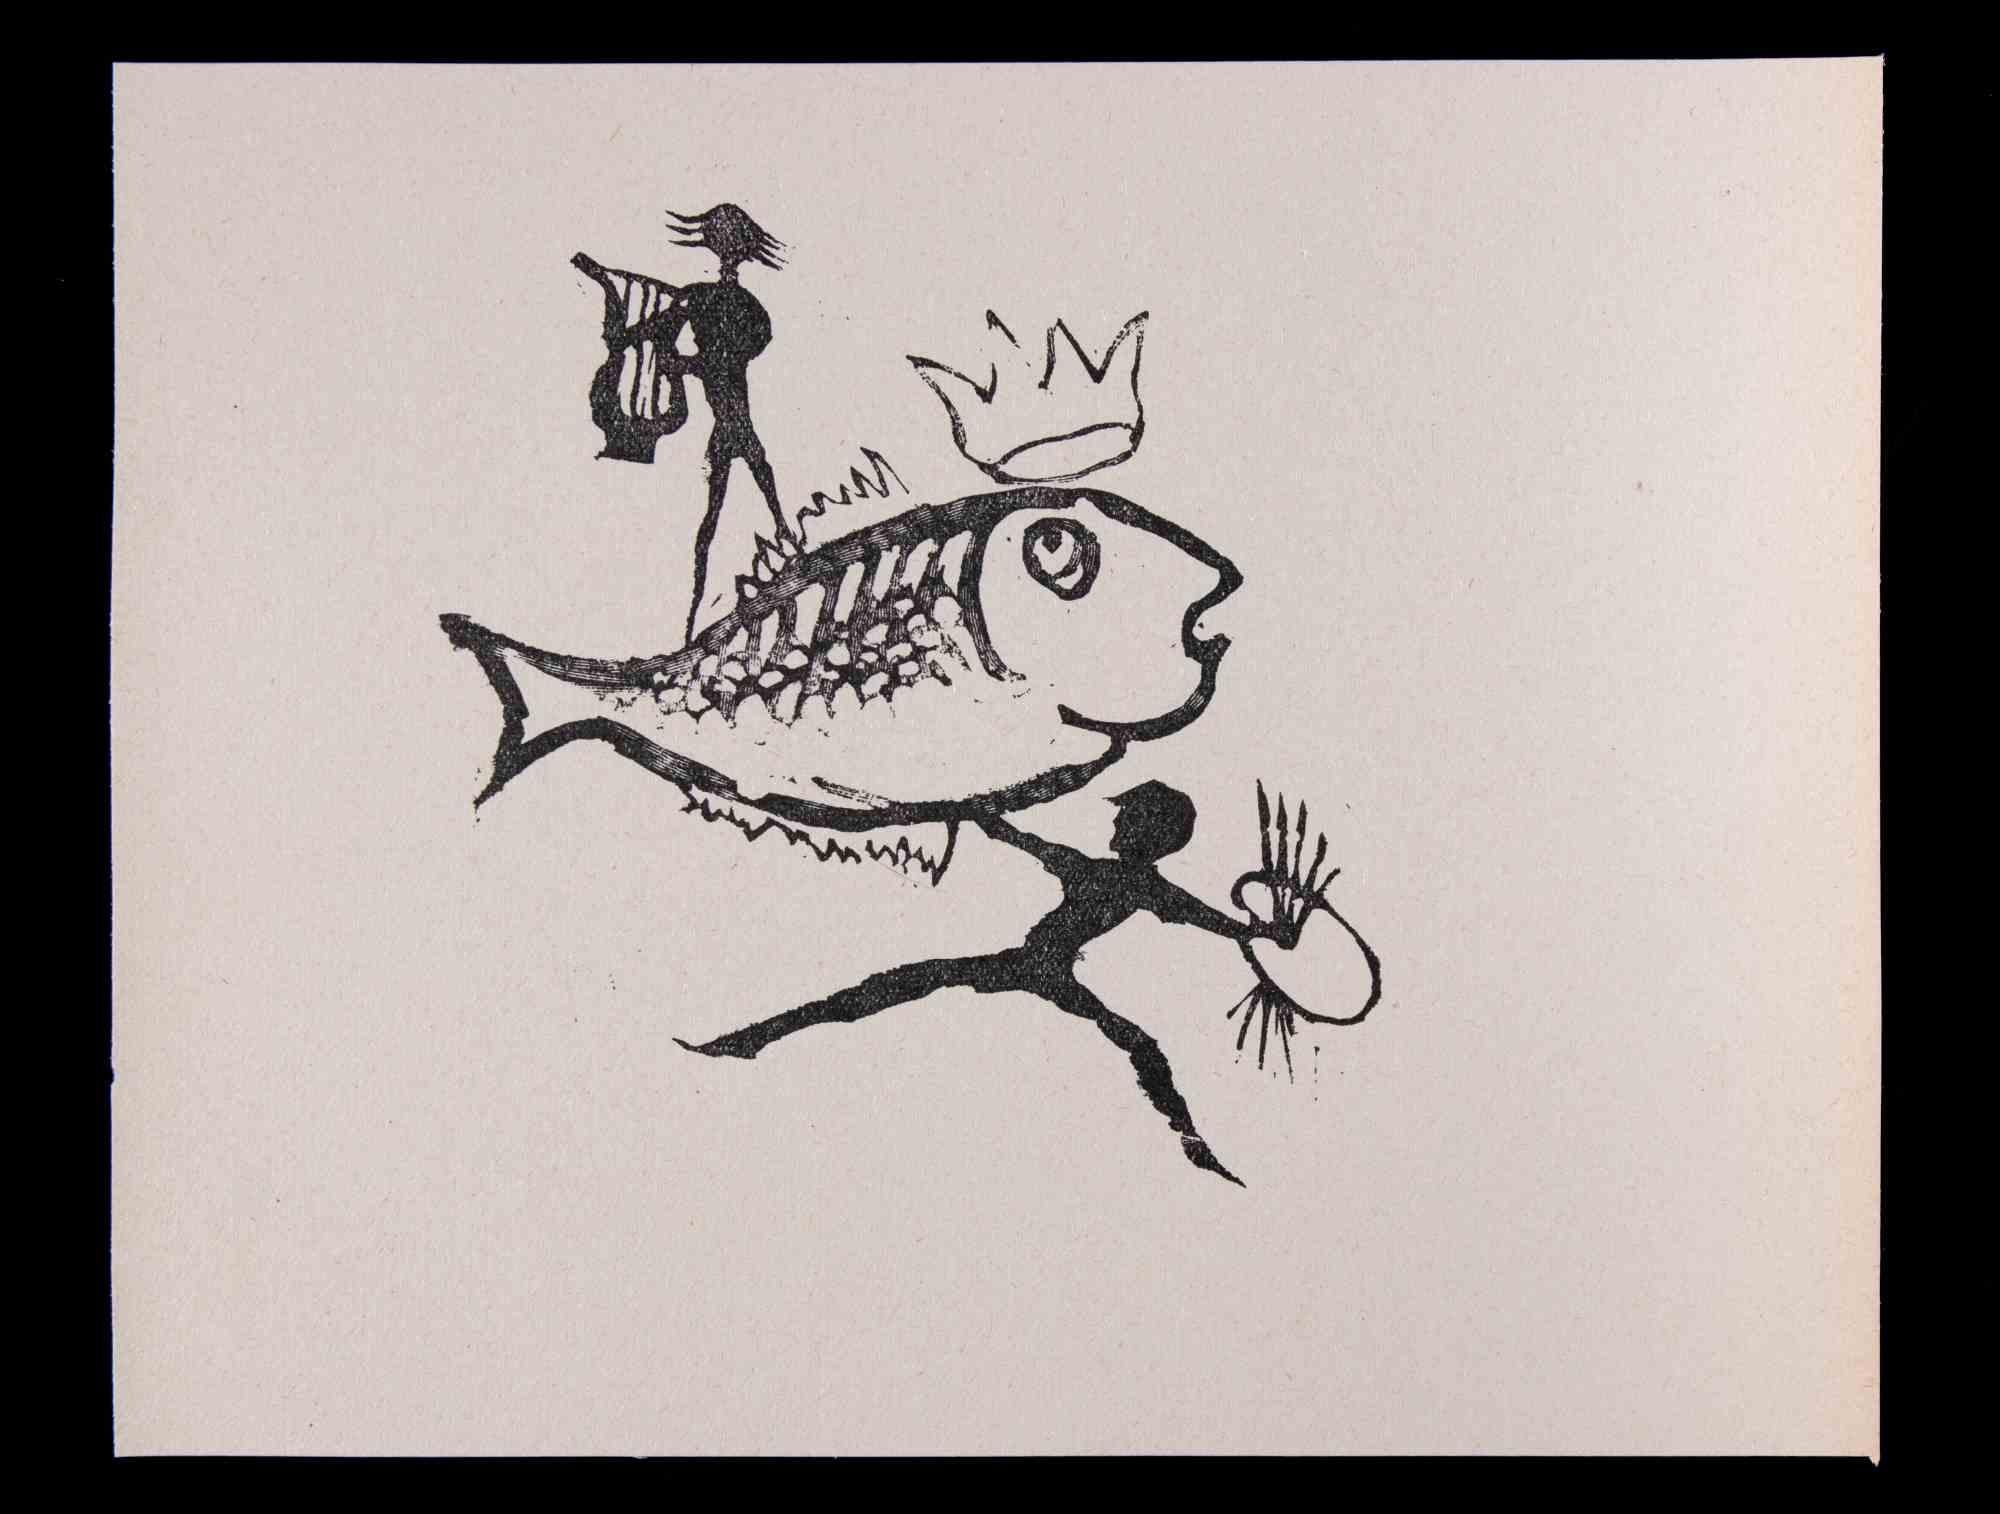 The King Fish and The Arts -  Linocut by Mino Maccari - 1951